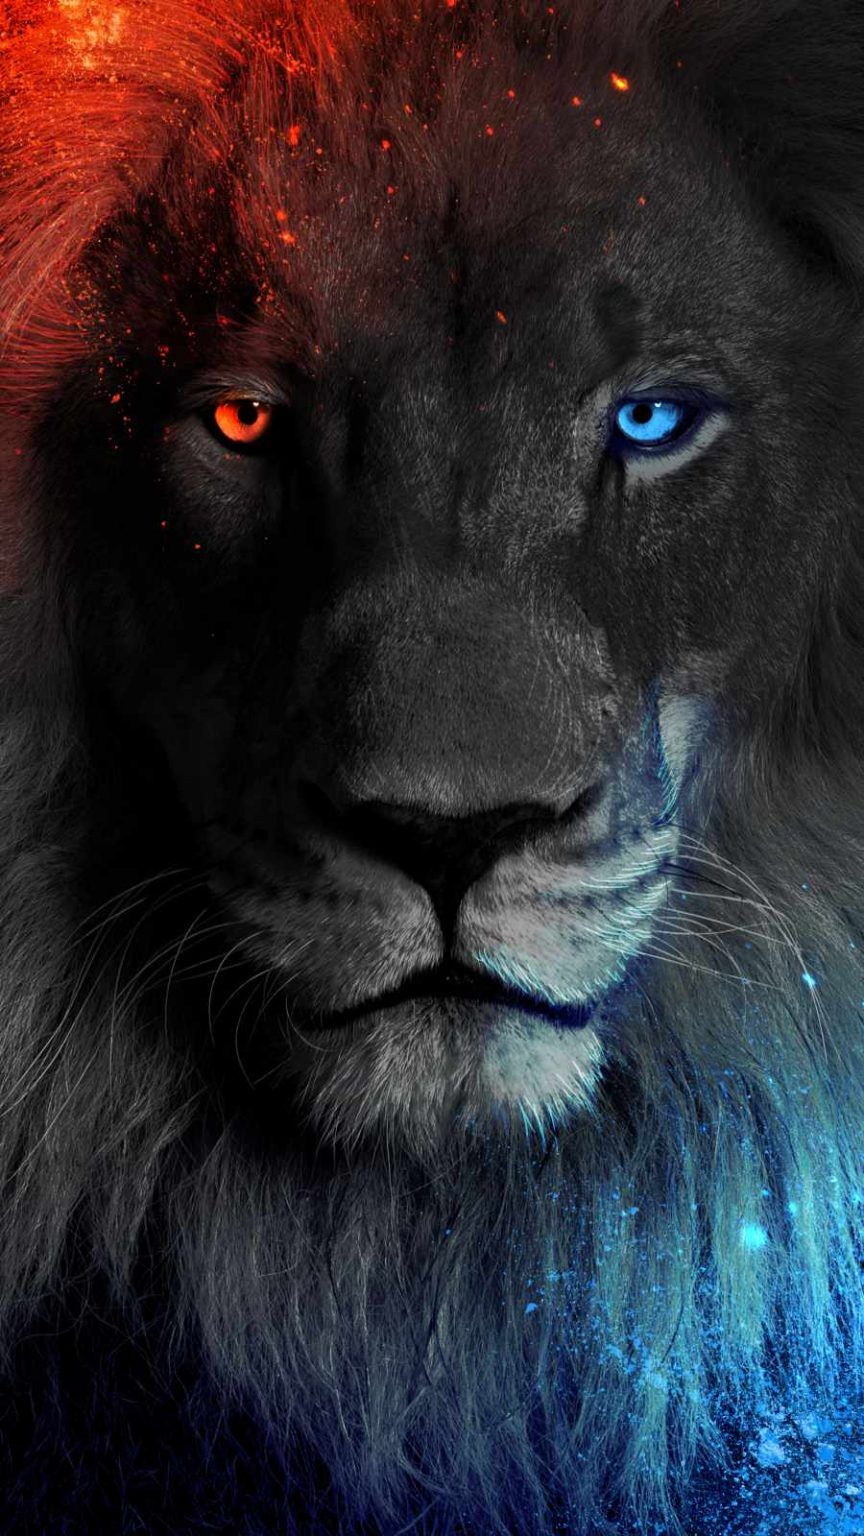 lion king 3 wallpaper